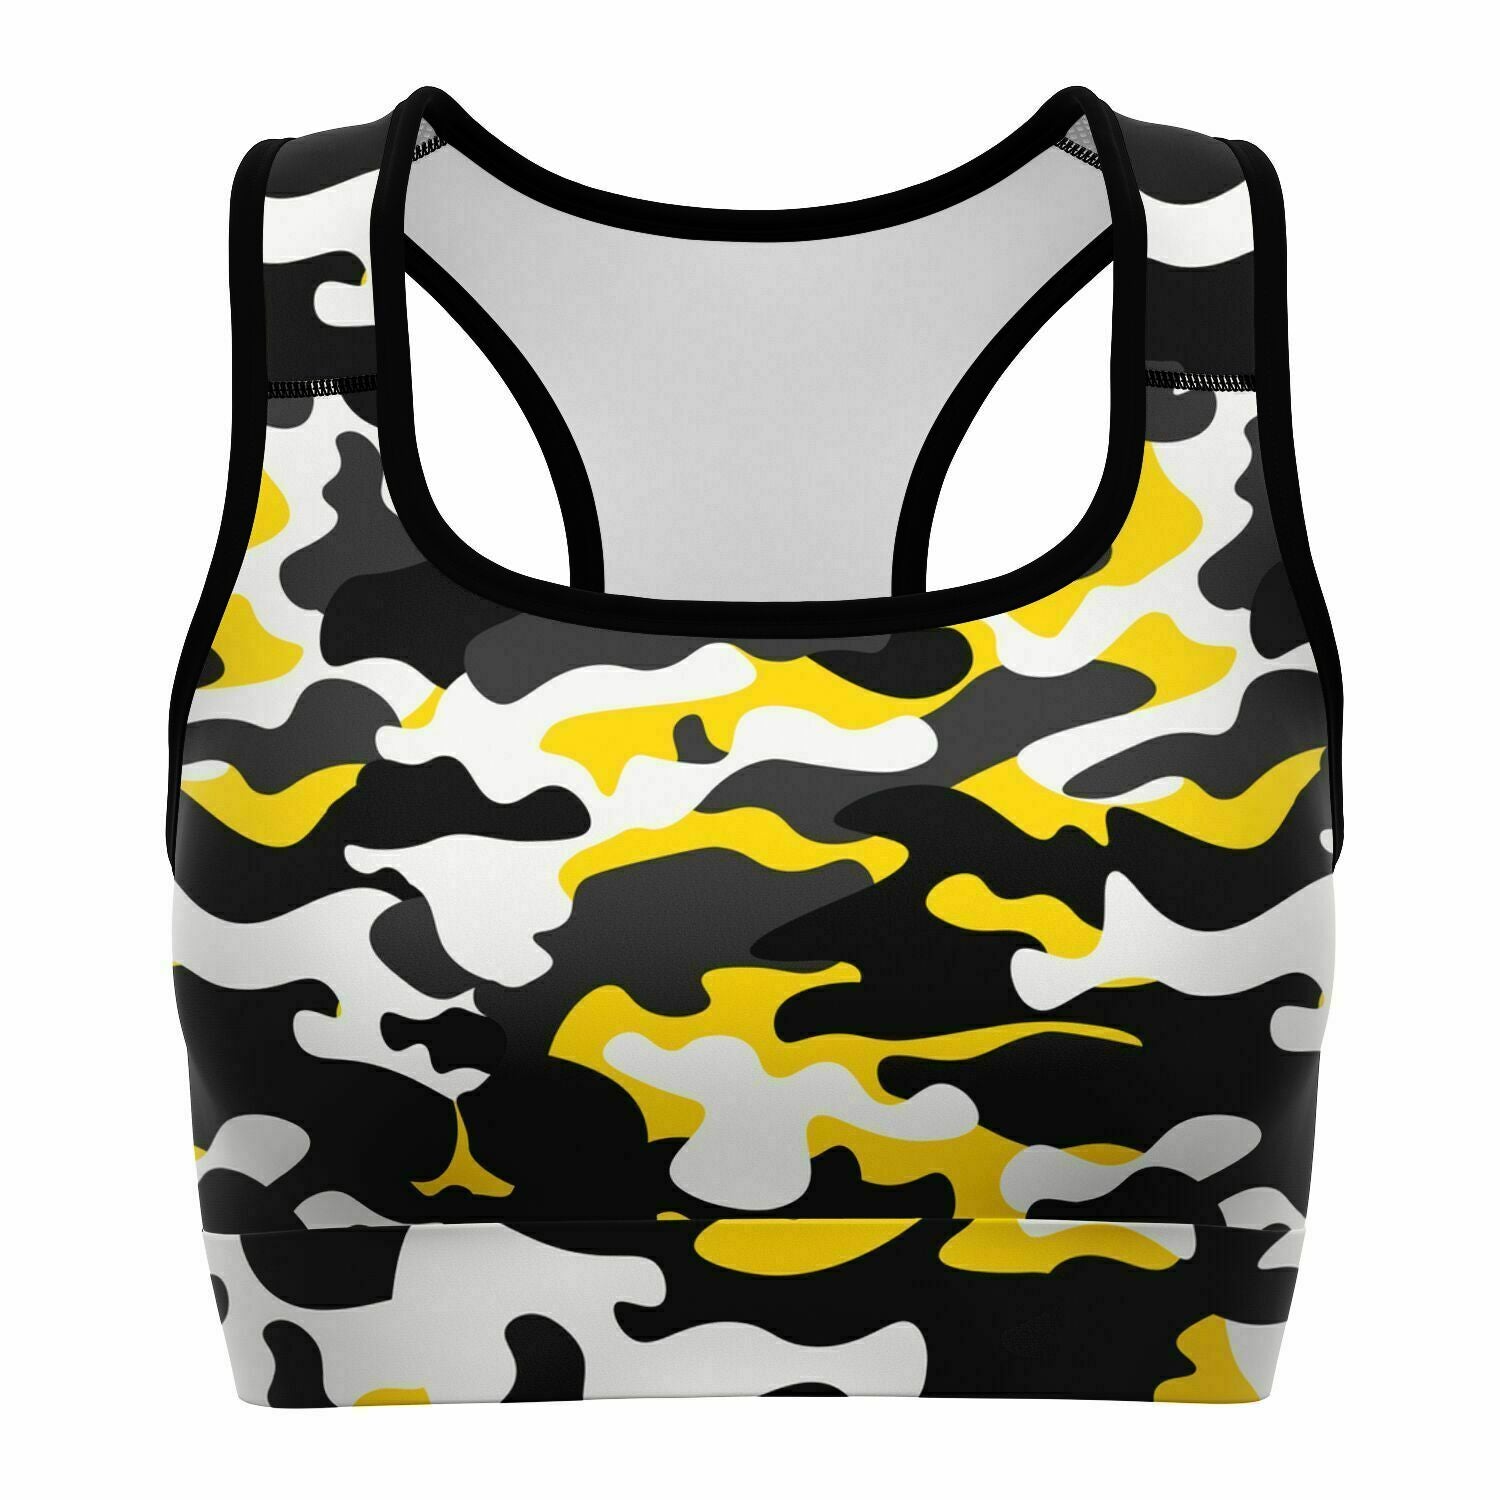 Women's Urban Jungle Yellow White Black Camouflage Athletic Sports Bra